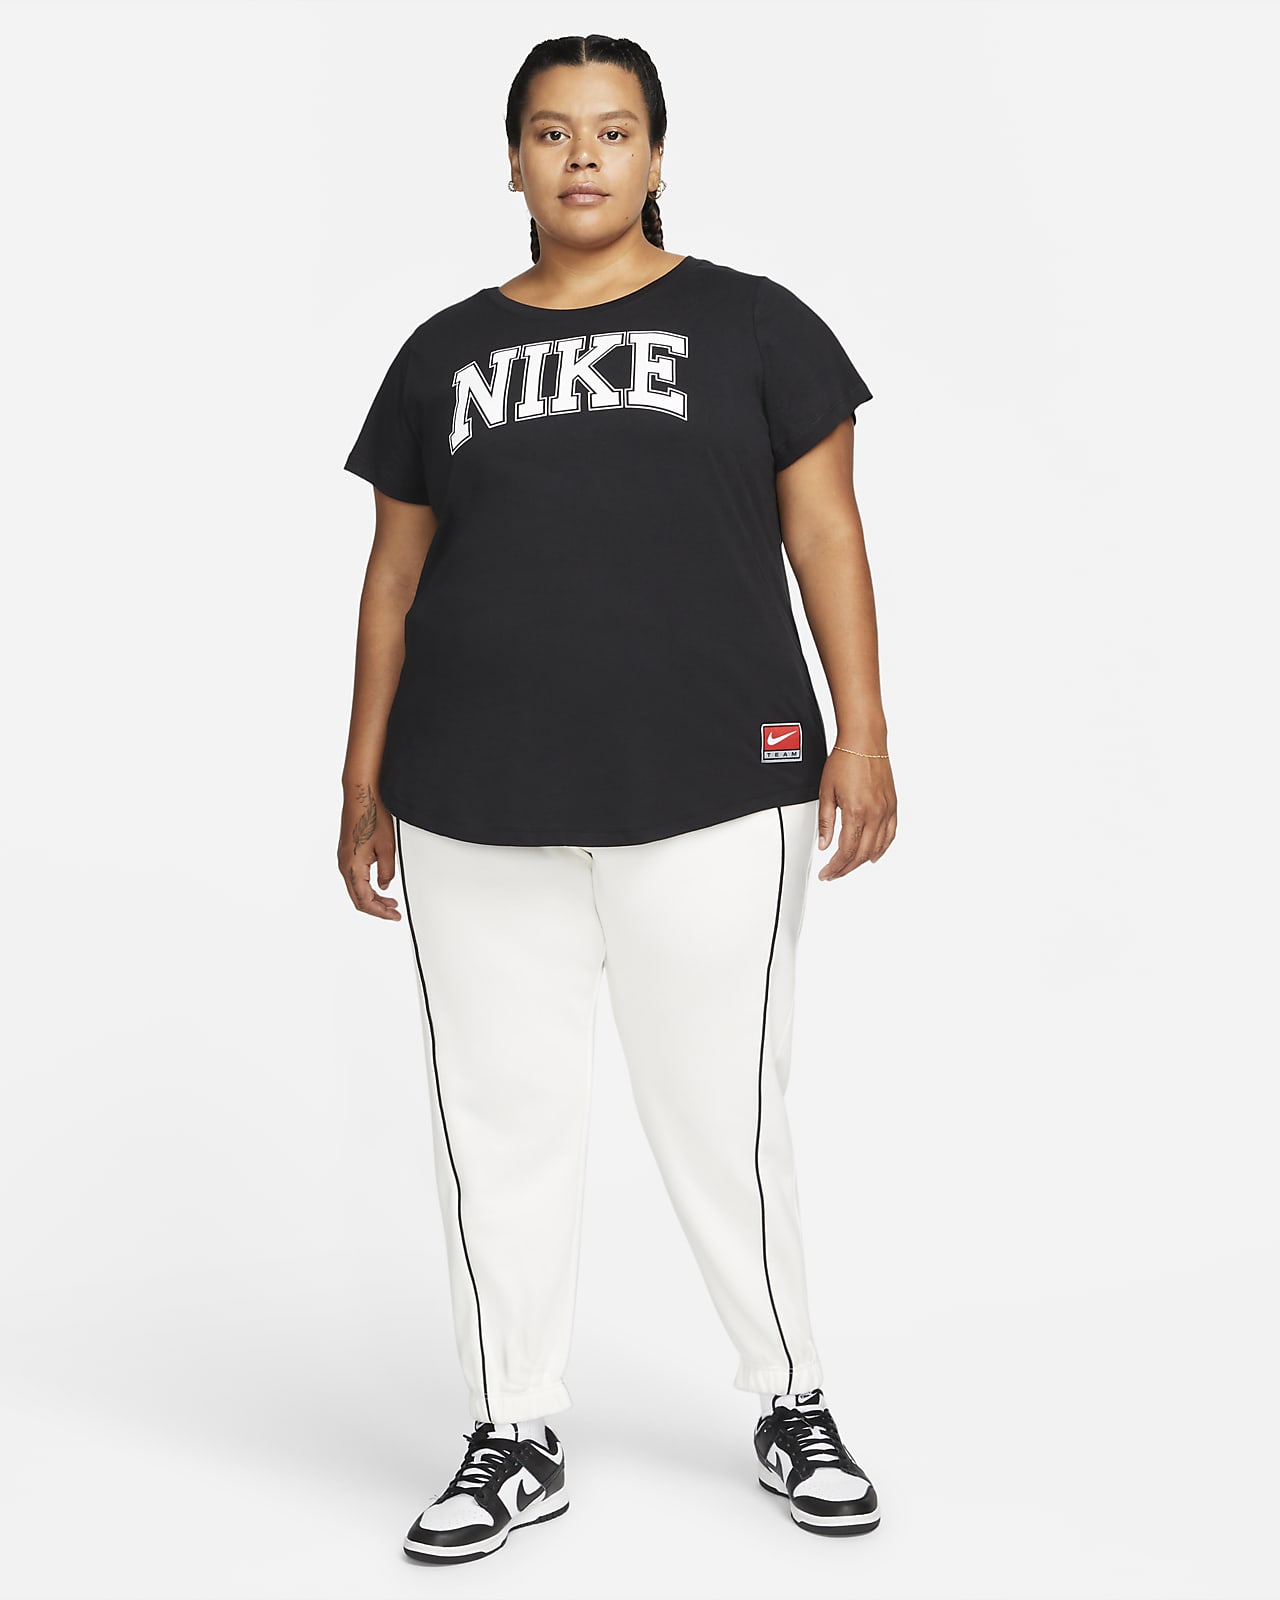 Women's Plus Size Tops & T-Shirts. Nike SG